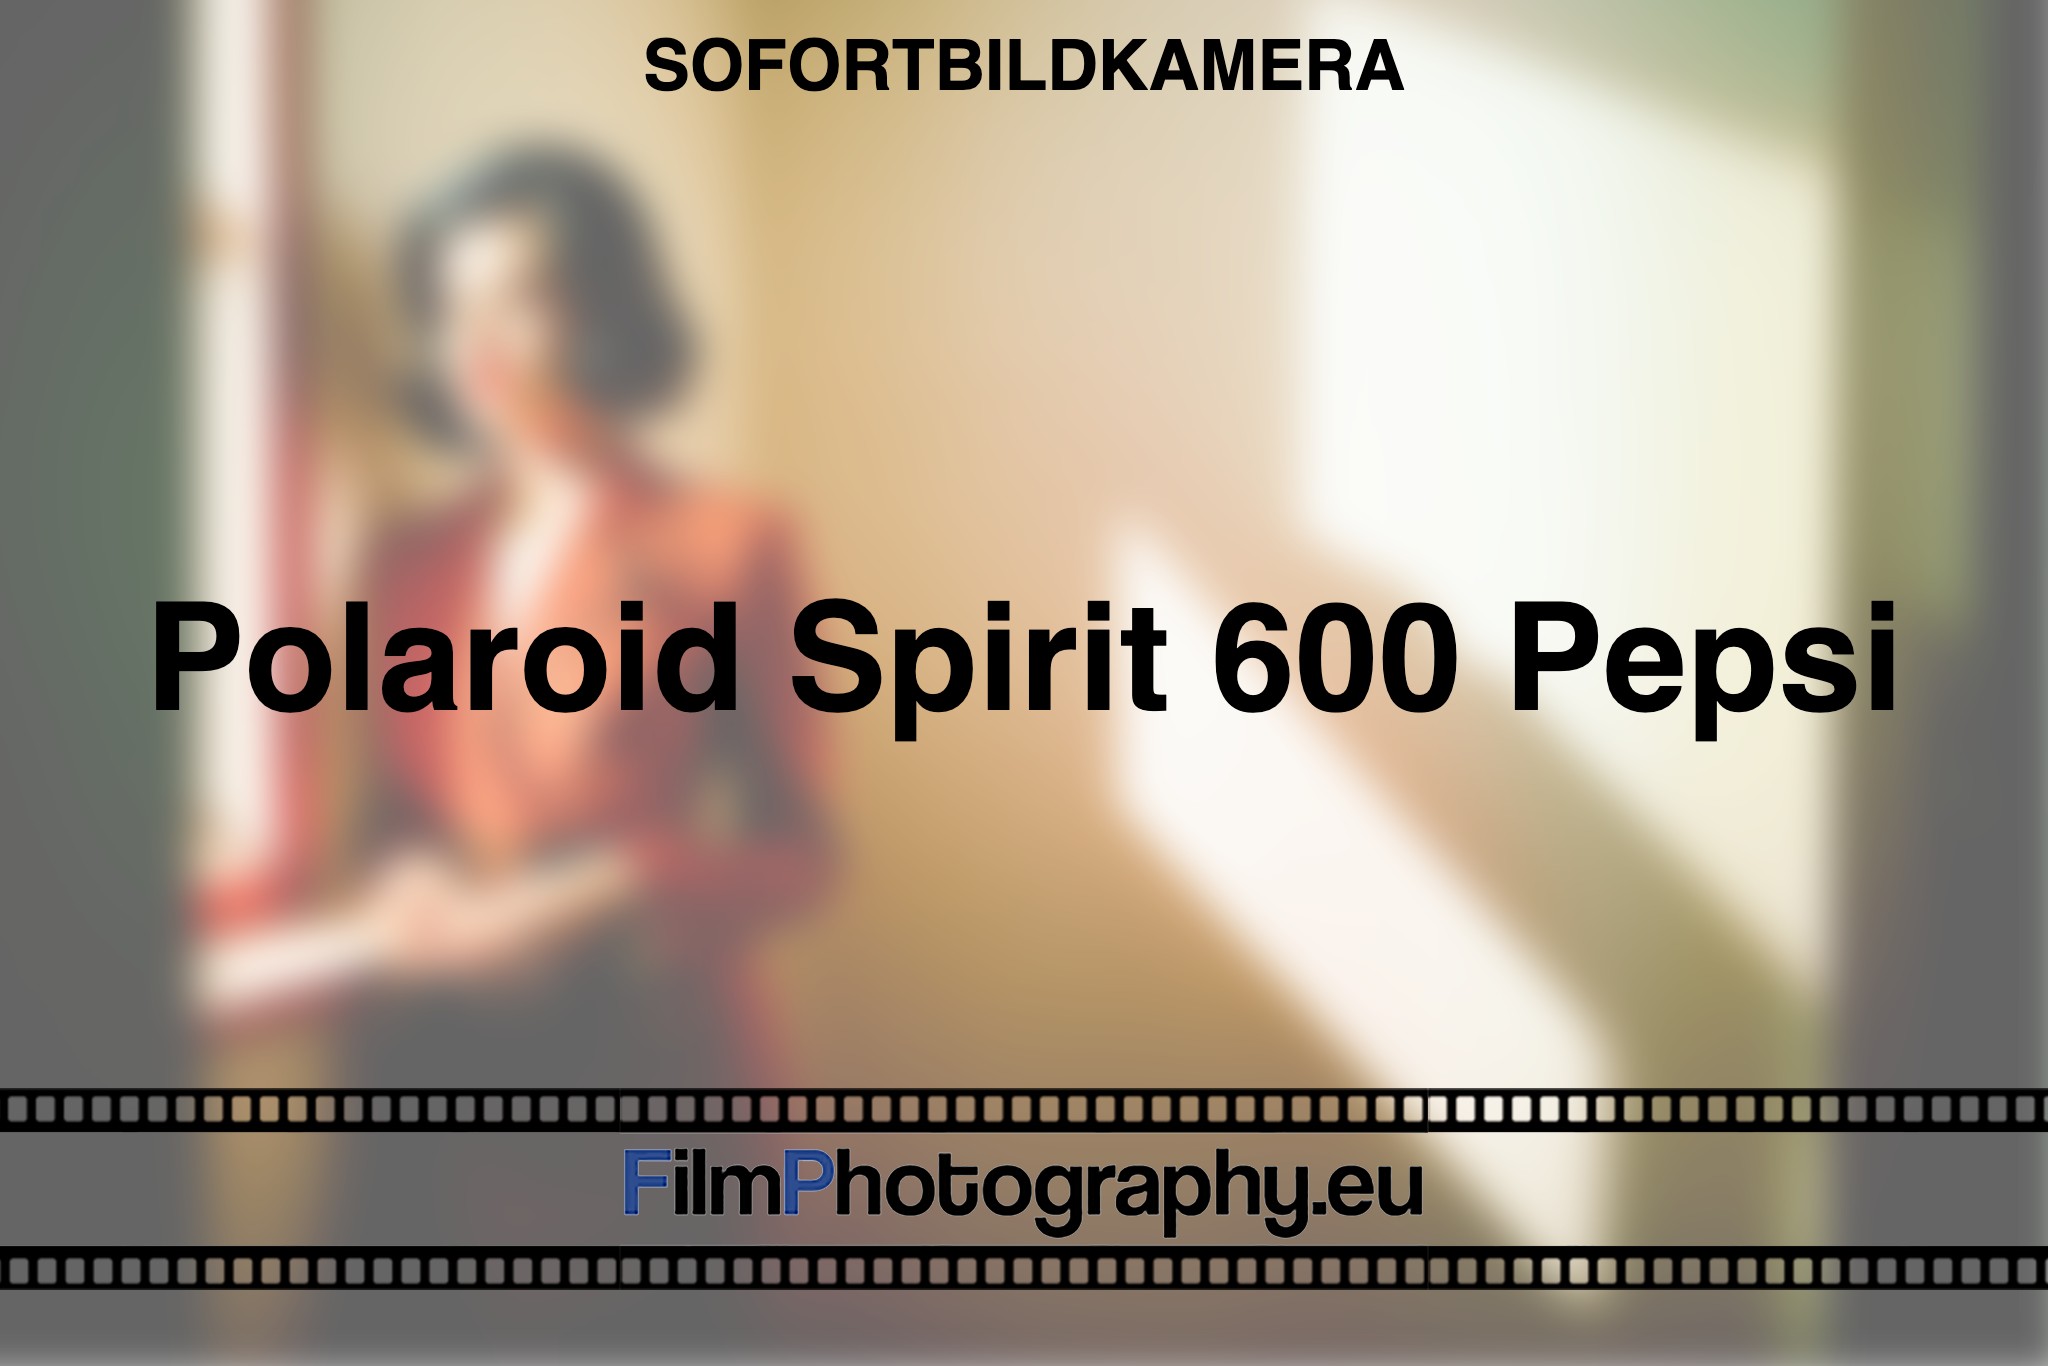 polaroid-spirit-600-pepsi-sofortbildkamera-bnv